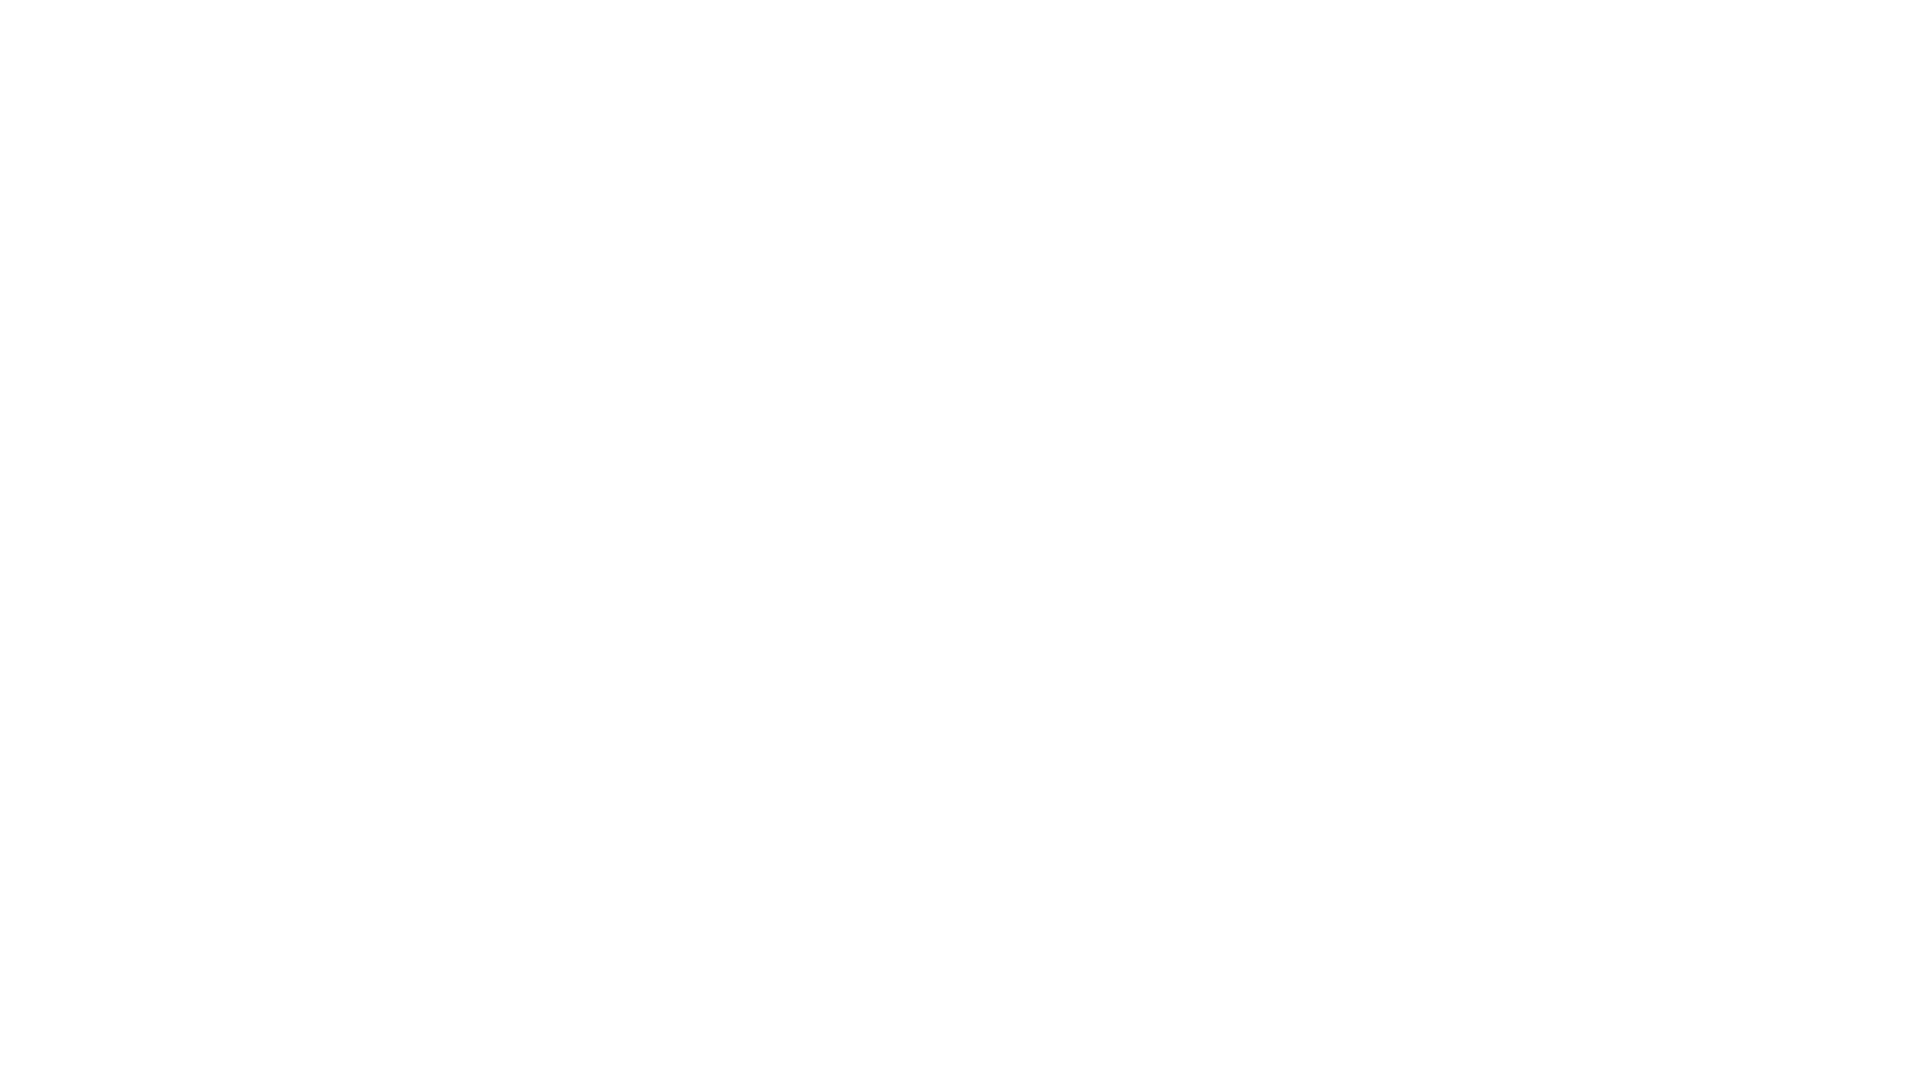 J+J Flooring.png